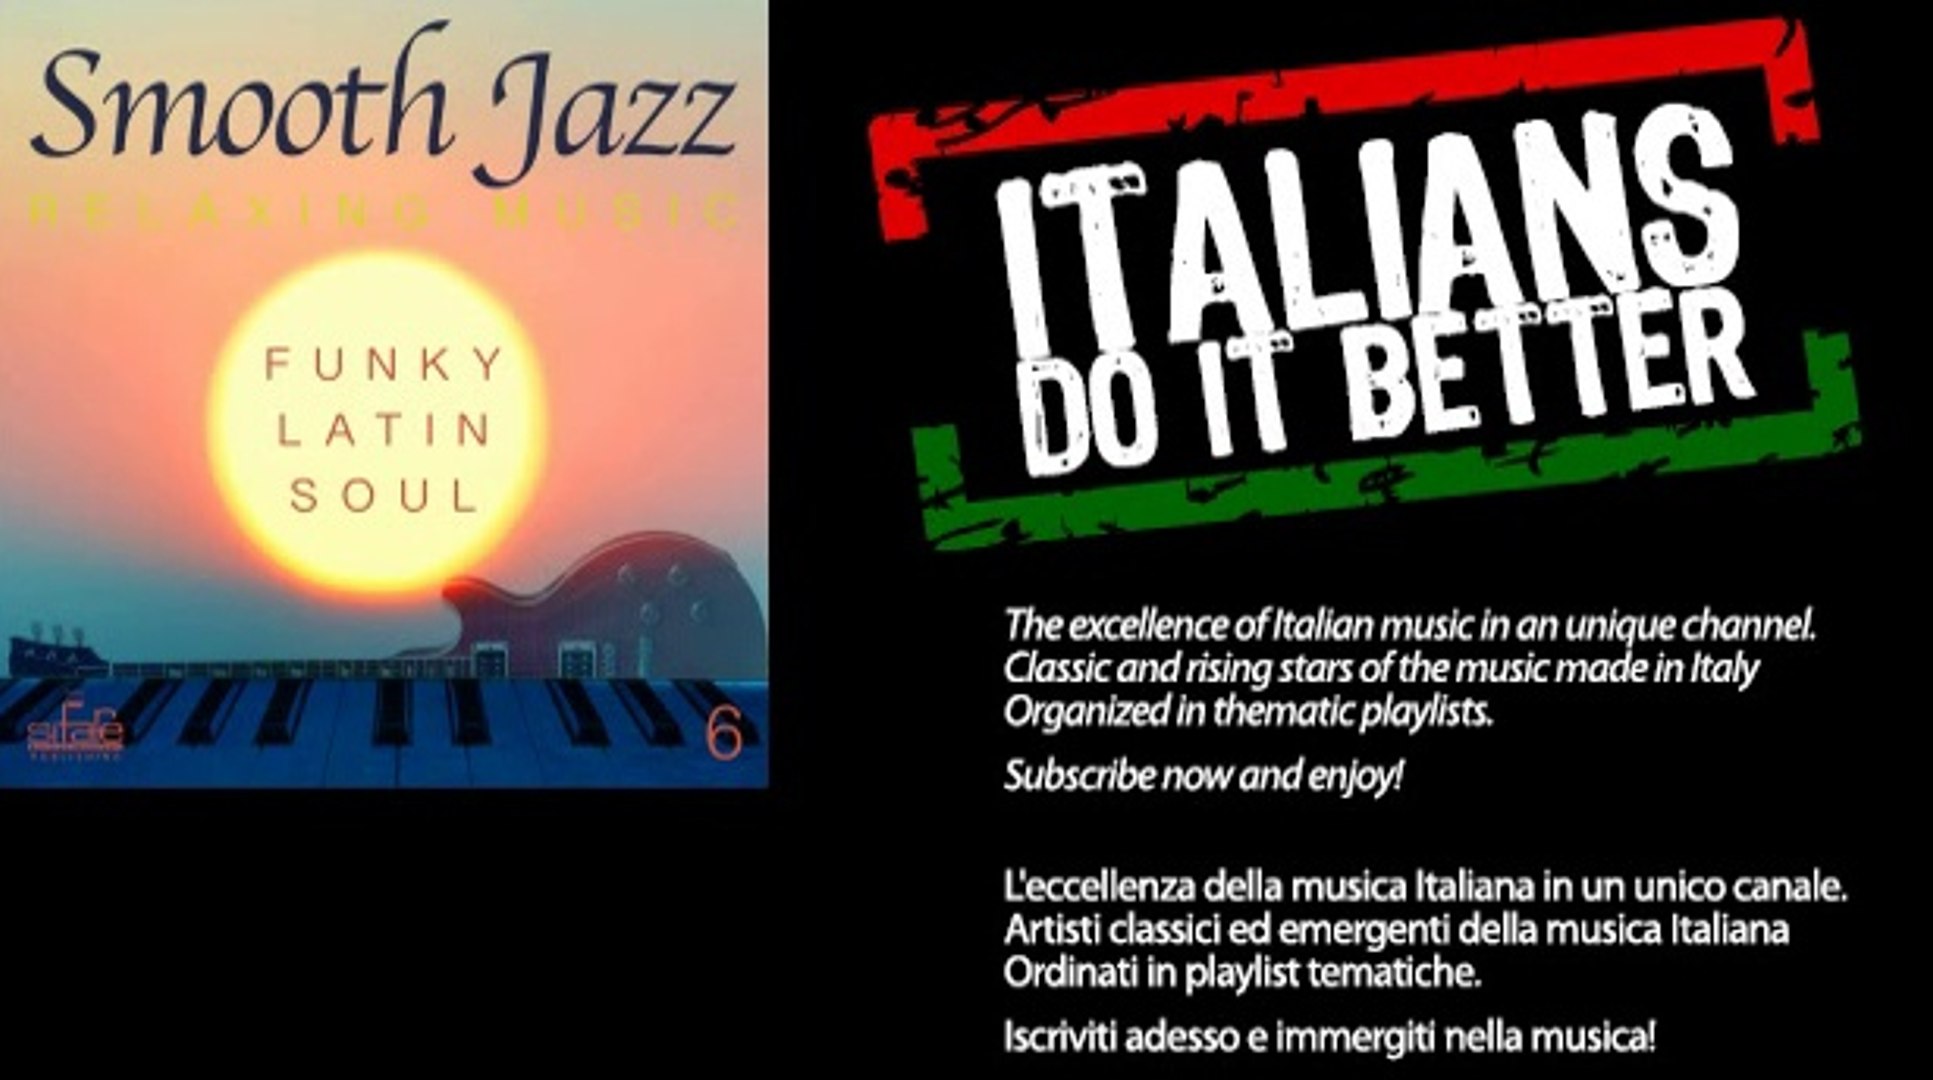 Francesco Digilio, Smooth Jazz Band - Smooth Jazz for Alice